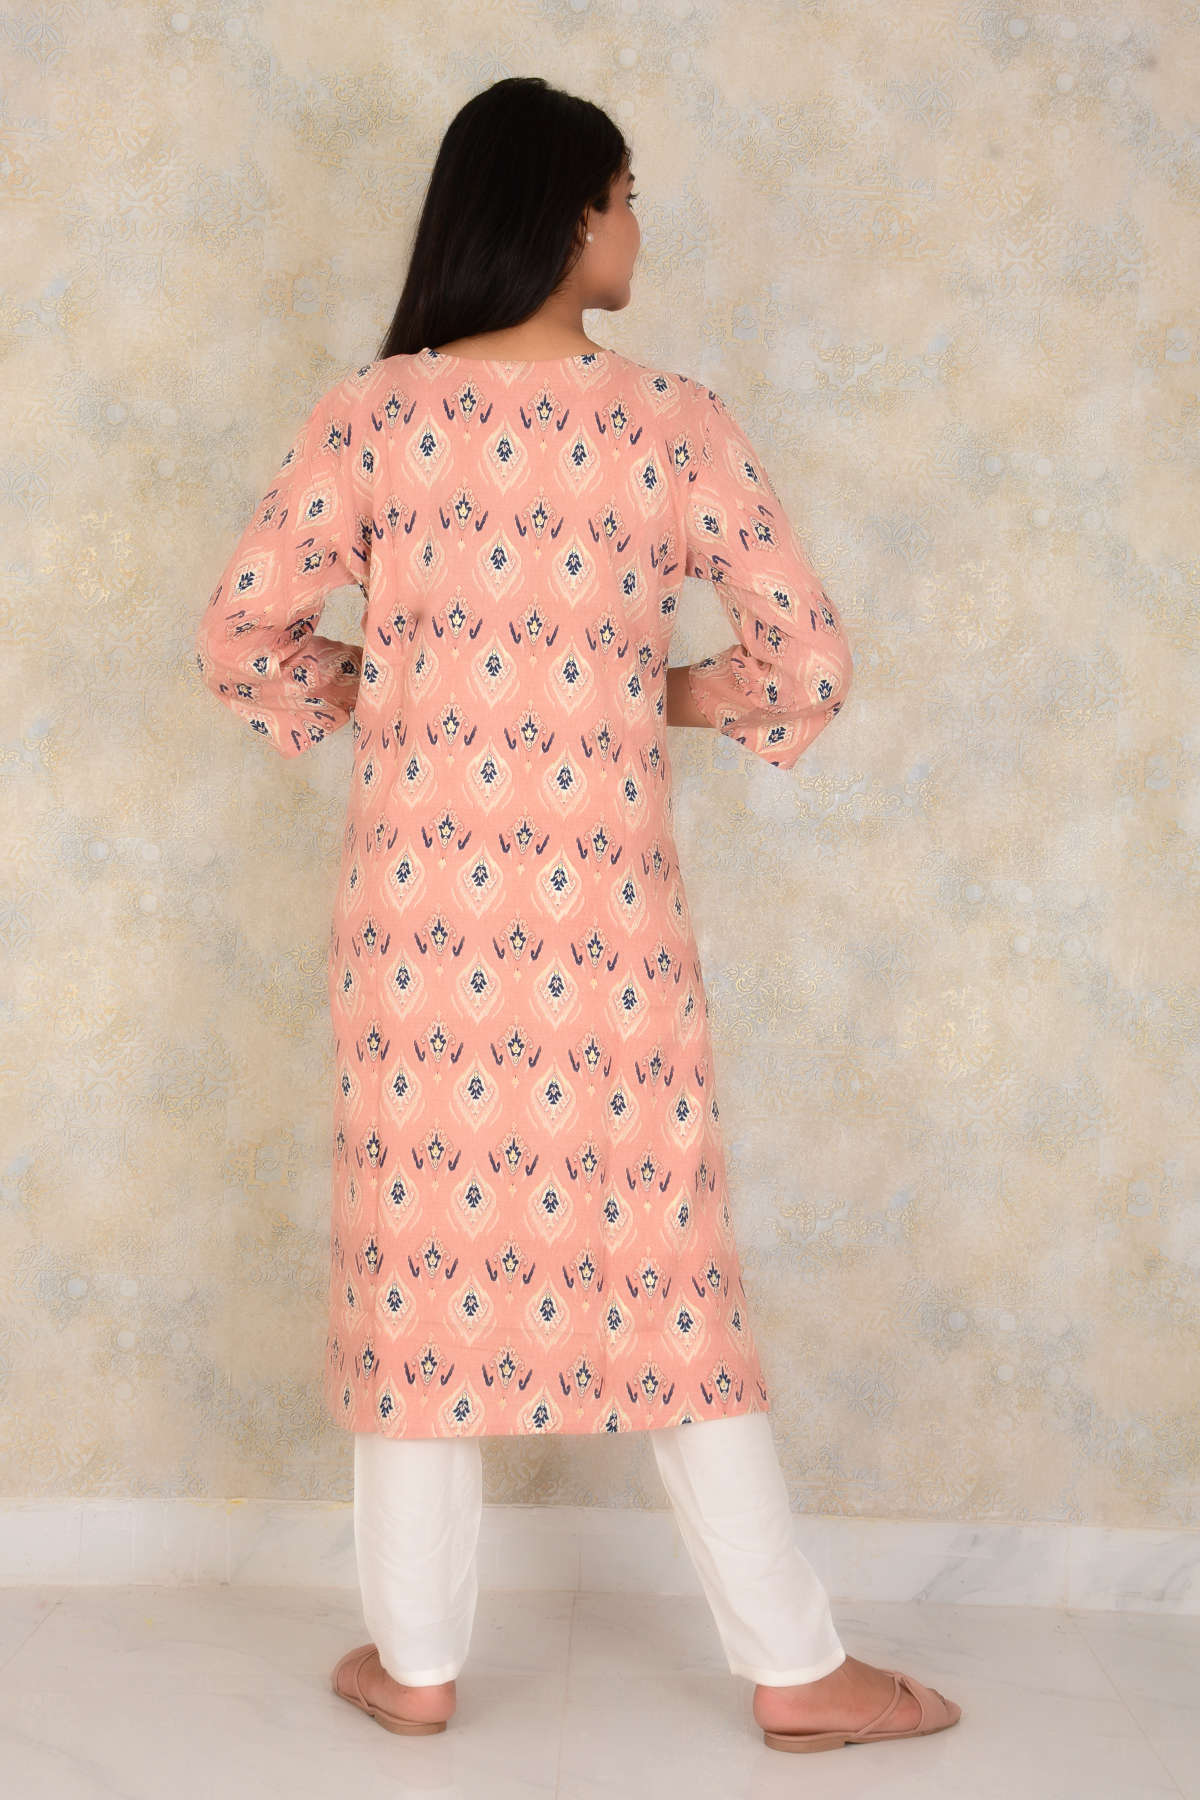 Cotton Printed Straight Single Kurti For Girls And Women, 1 Peice Dress